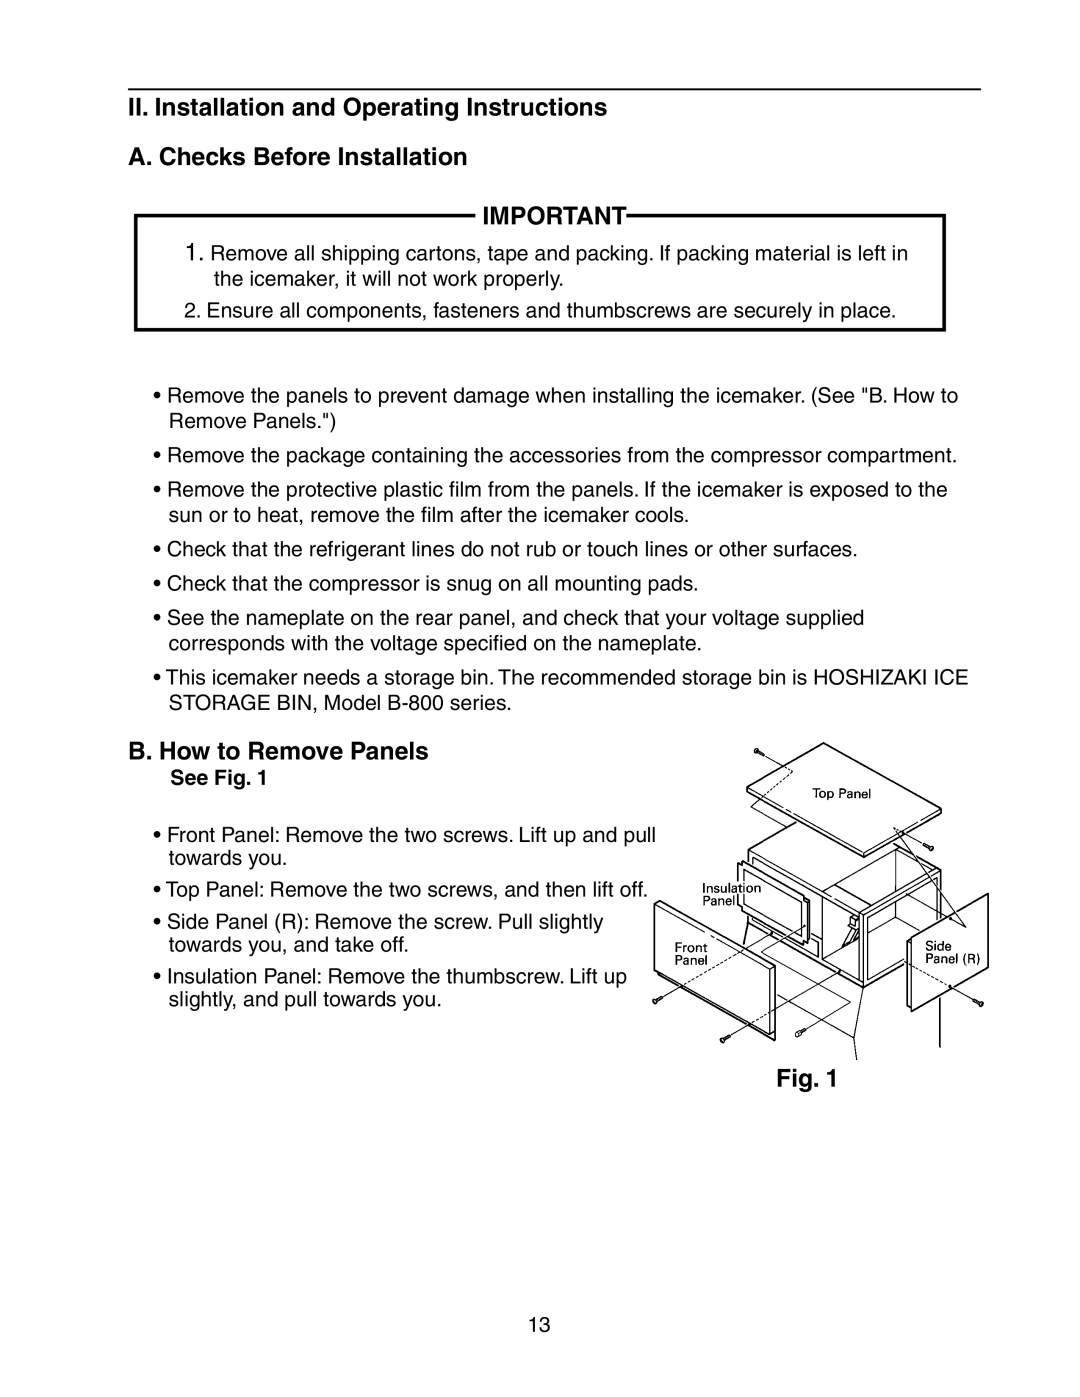 Hoshizaki KM-1800SWH/3, KM-1800SRH/3, KM-1800SAH/3 instruction manual B. How to Remove Panels, See Fig 